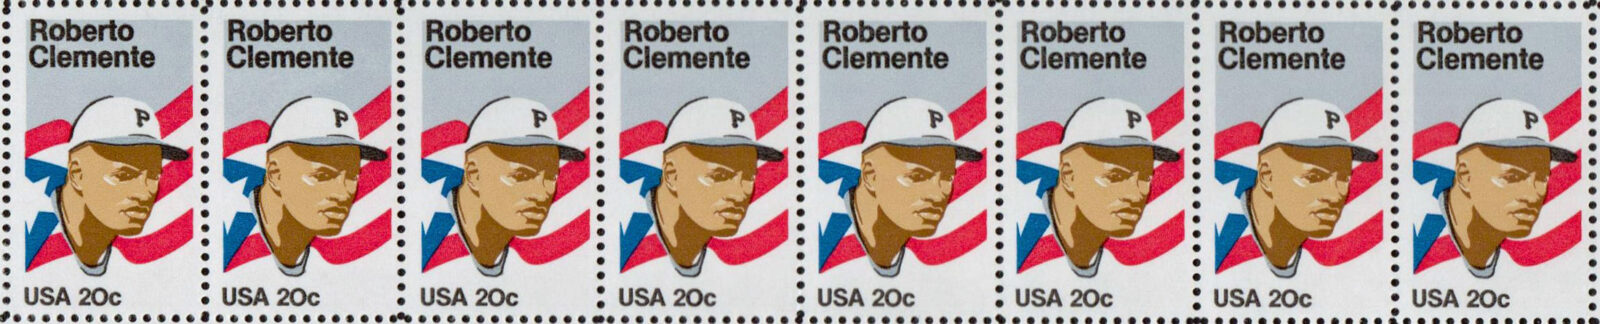 Roberto Clemente, 1984 U.S. Postage Stamp header